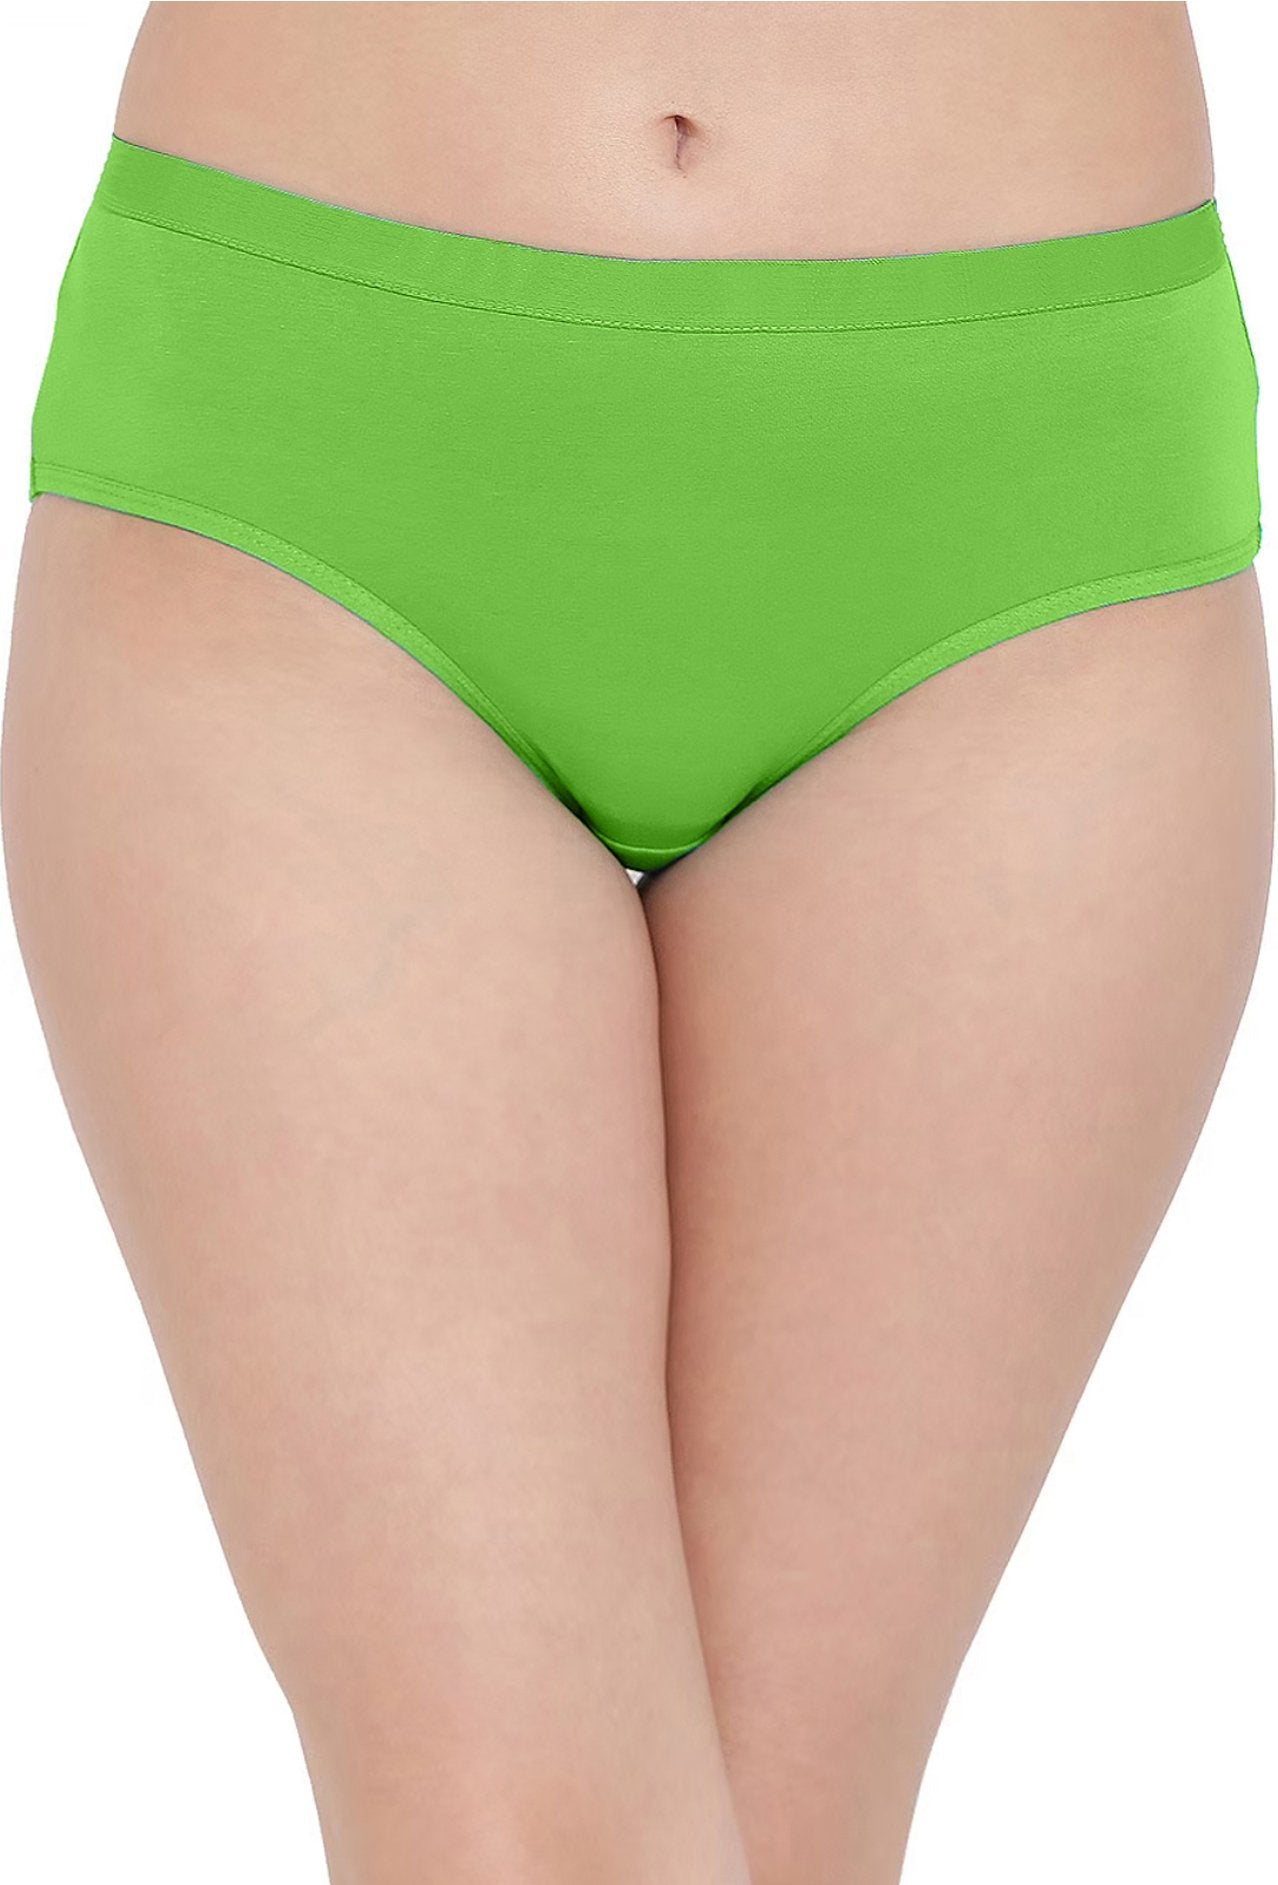 Panties - Buy Women Plain Panties bikni hipster brief panty Online